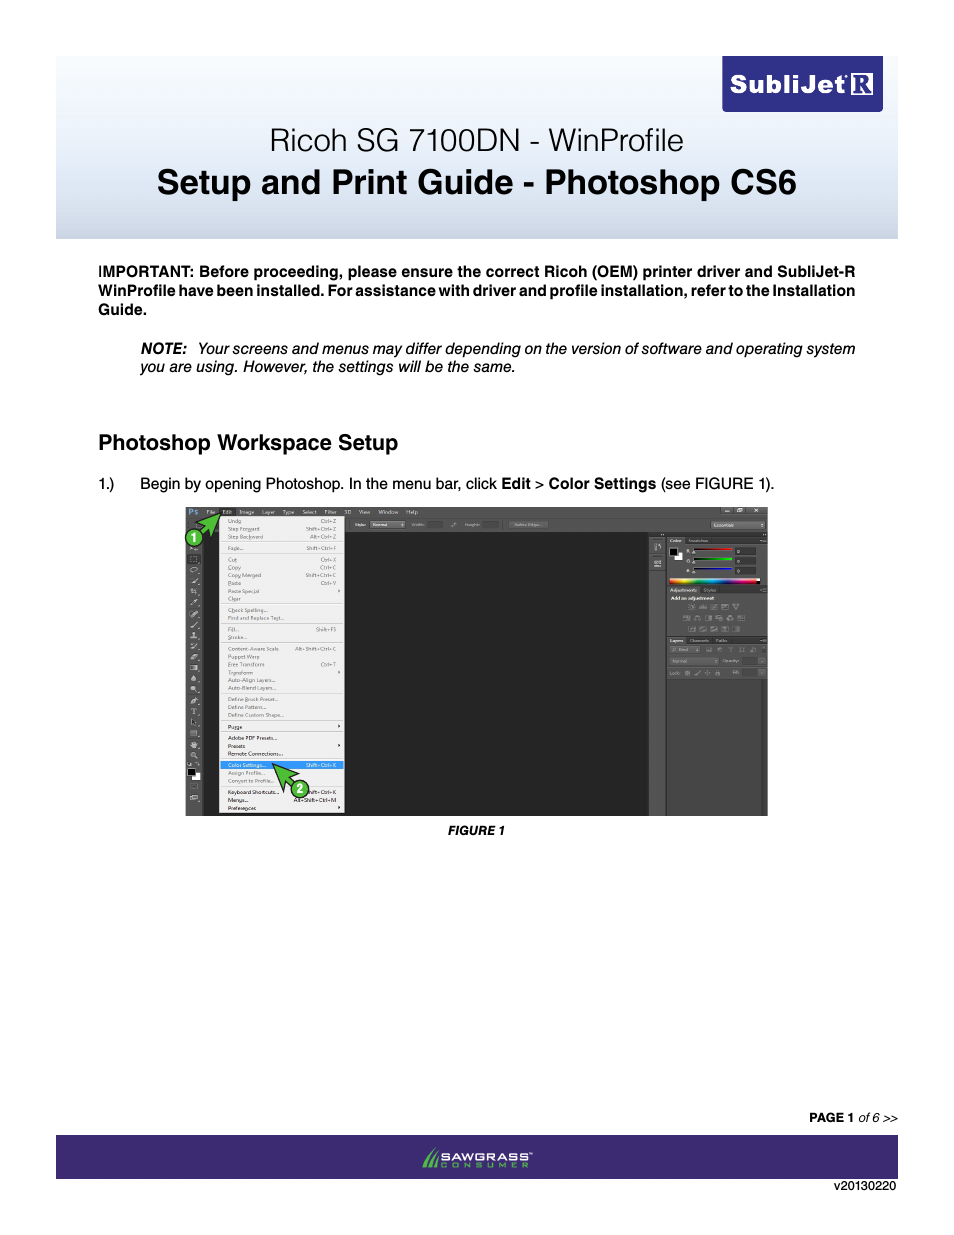 SubliJet R Ricoh SG7100DN (Windows ICC Profile Setup): Print & Setup Guide Adobe Photoshop CS6